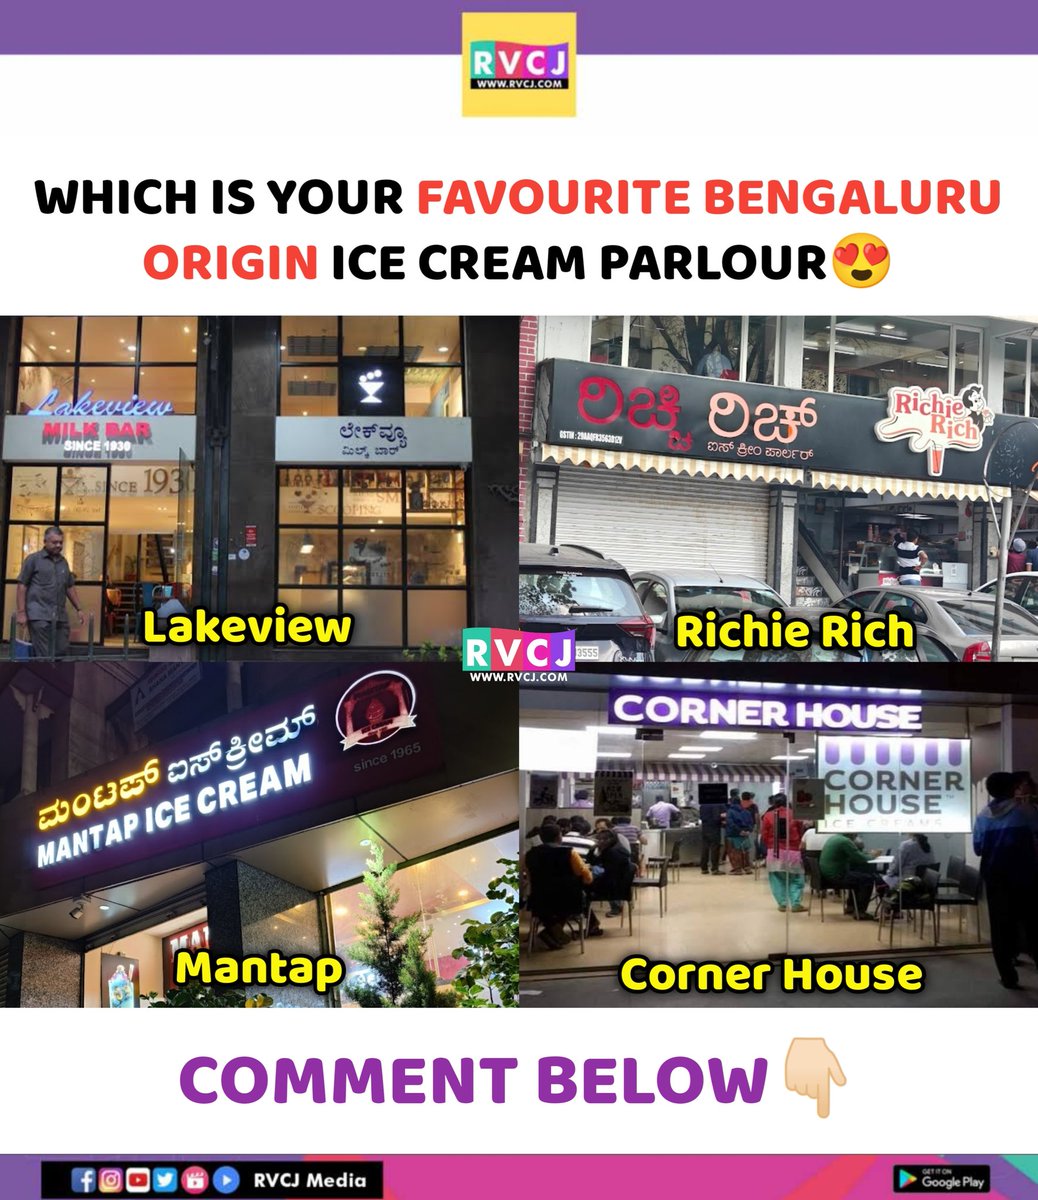 Comment Below Your Fav Ice-cream #Lakeview #RichieRich #Mantap #CornerHouse #Icecream #Kannada #Bengaluru #RvcjKannada